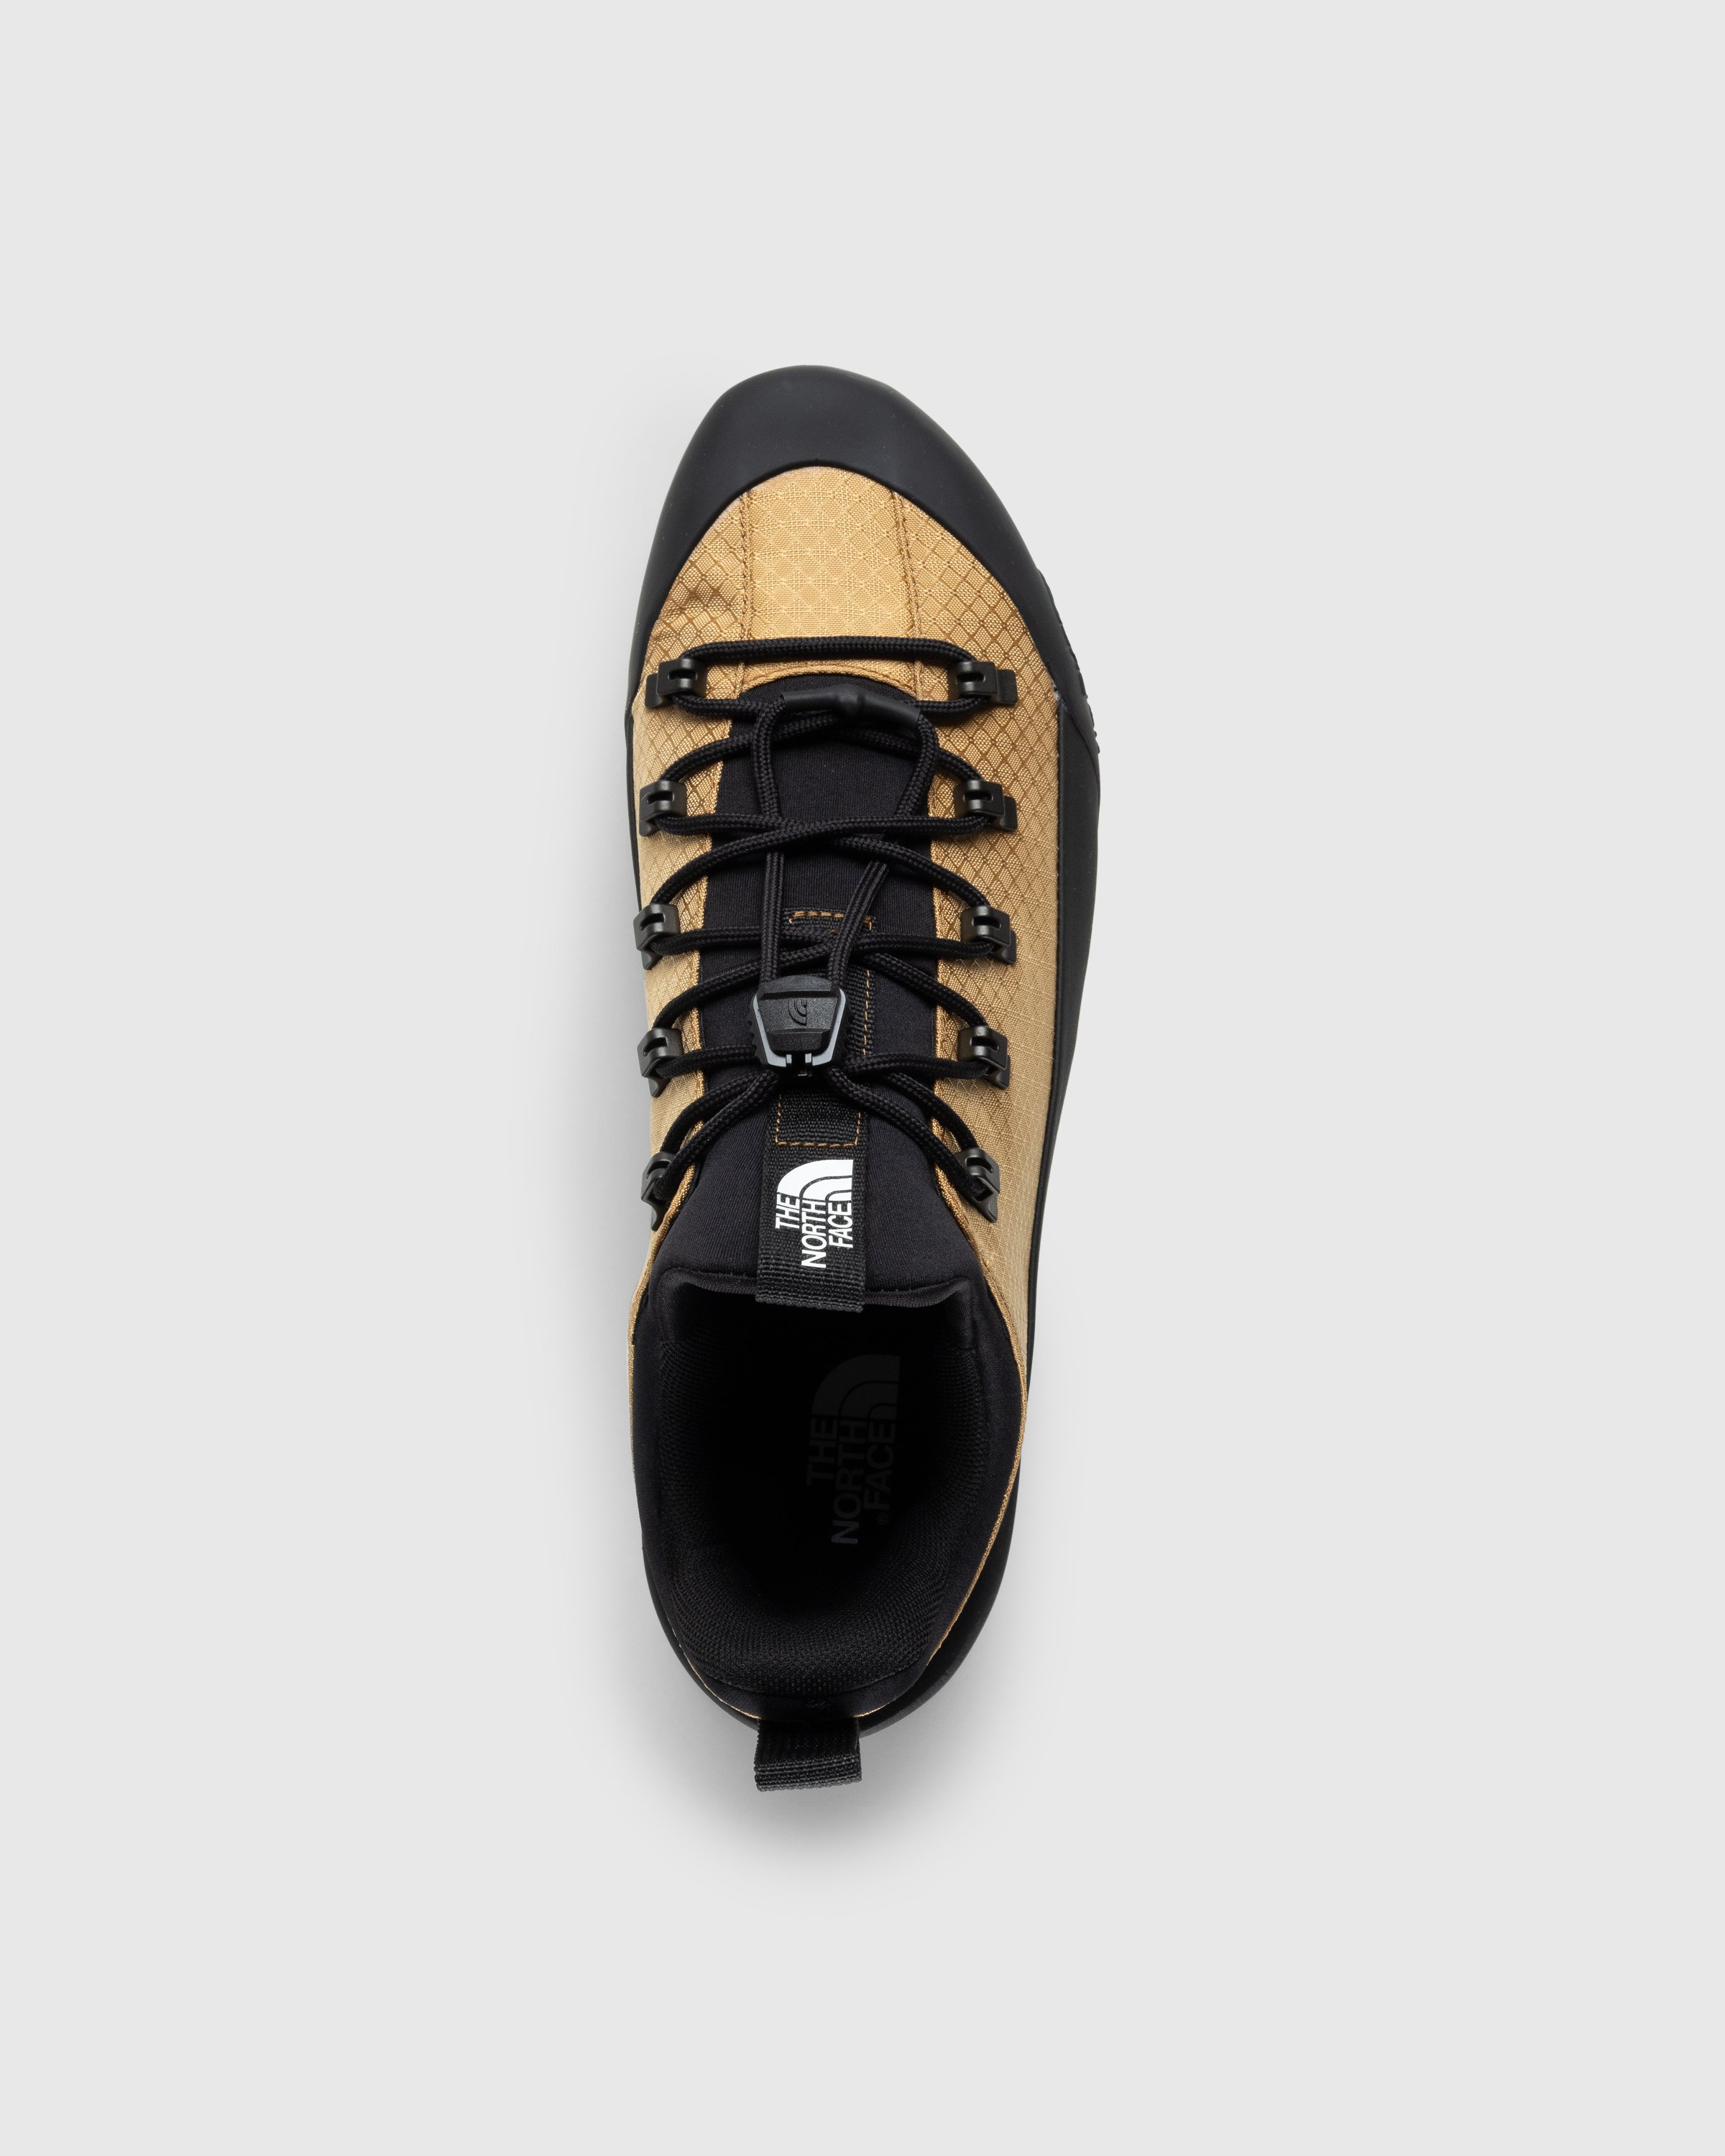 The North Face - Glenclyffe Low Almond Butter/TNF Black - Footwear - Beige - Image 5